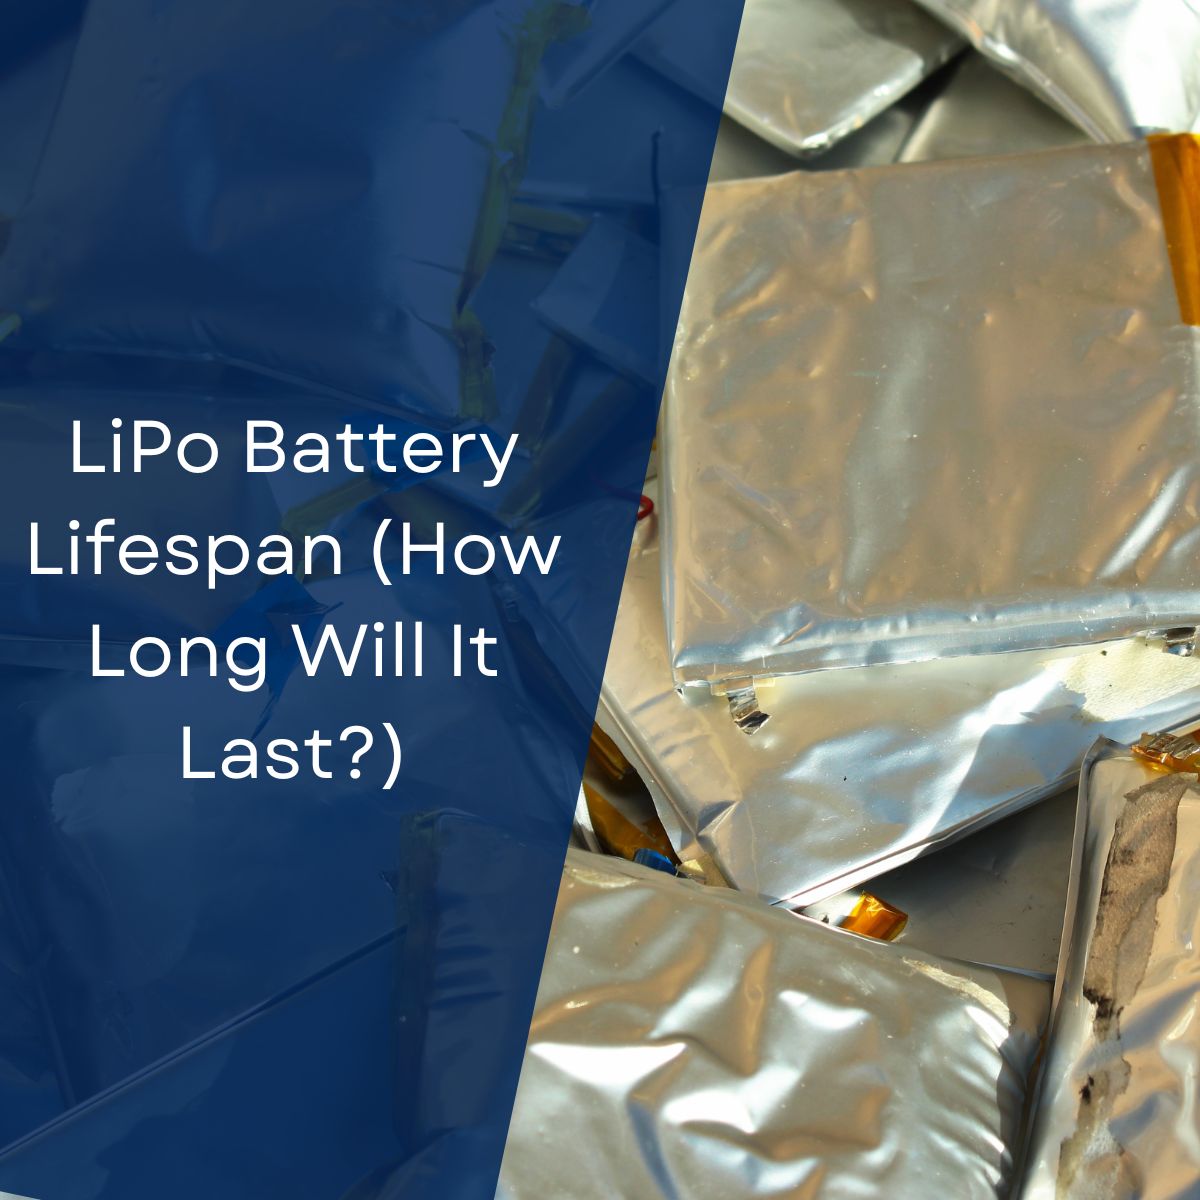 LiPo Battery Lifespan (How Long Will It Last?)